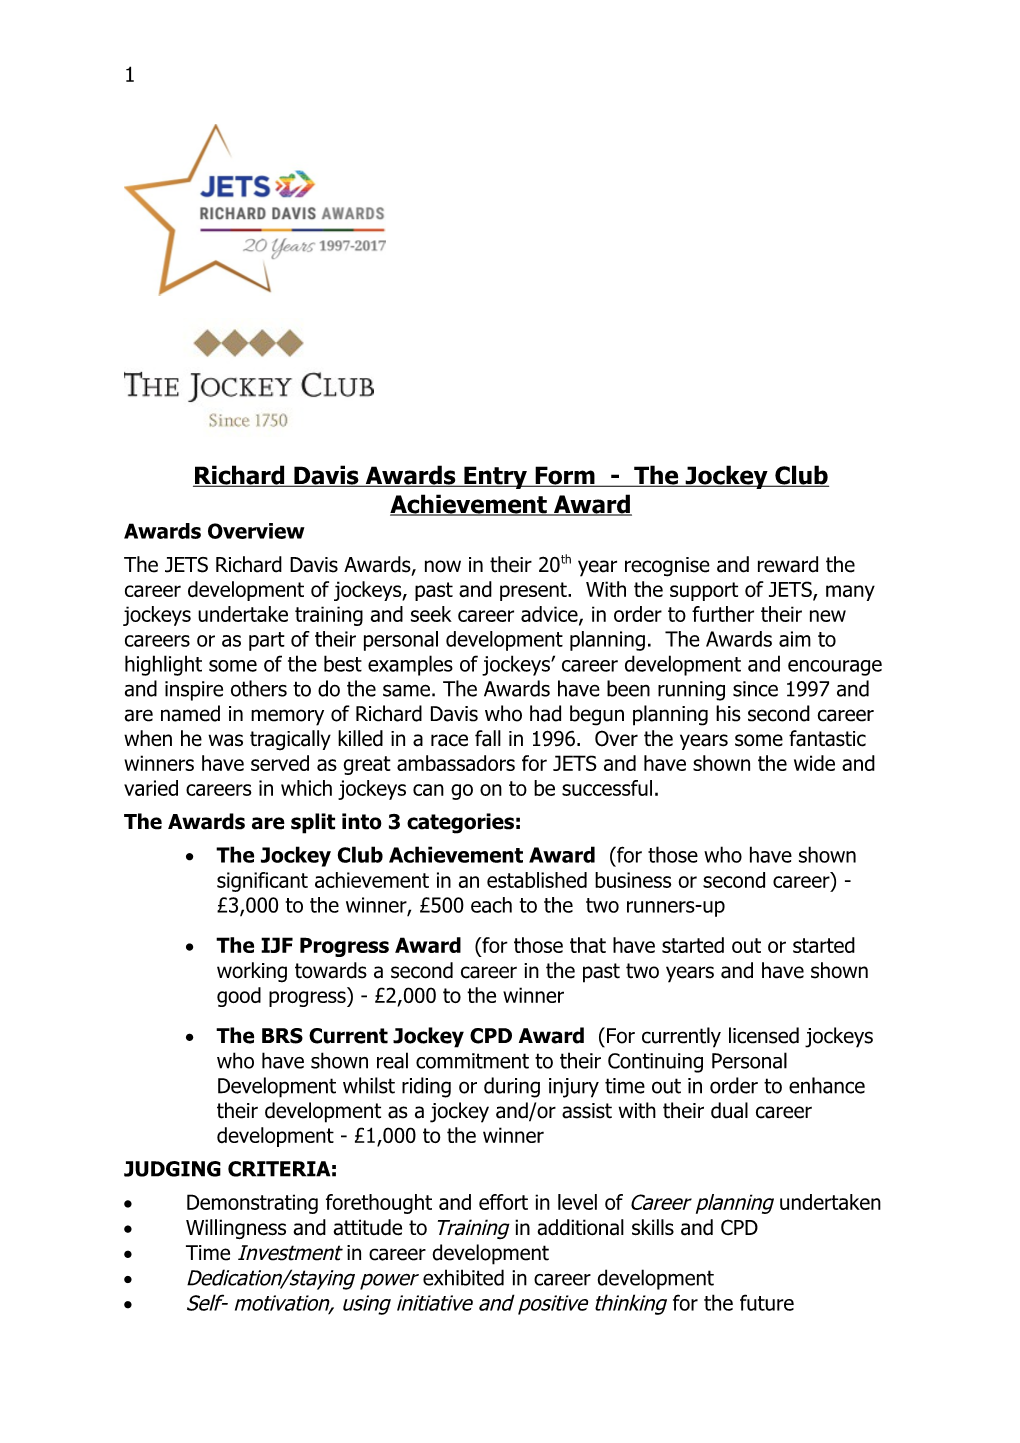 Richard Davis Awards Entry Form - the Jockey Club Achievement Award